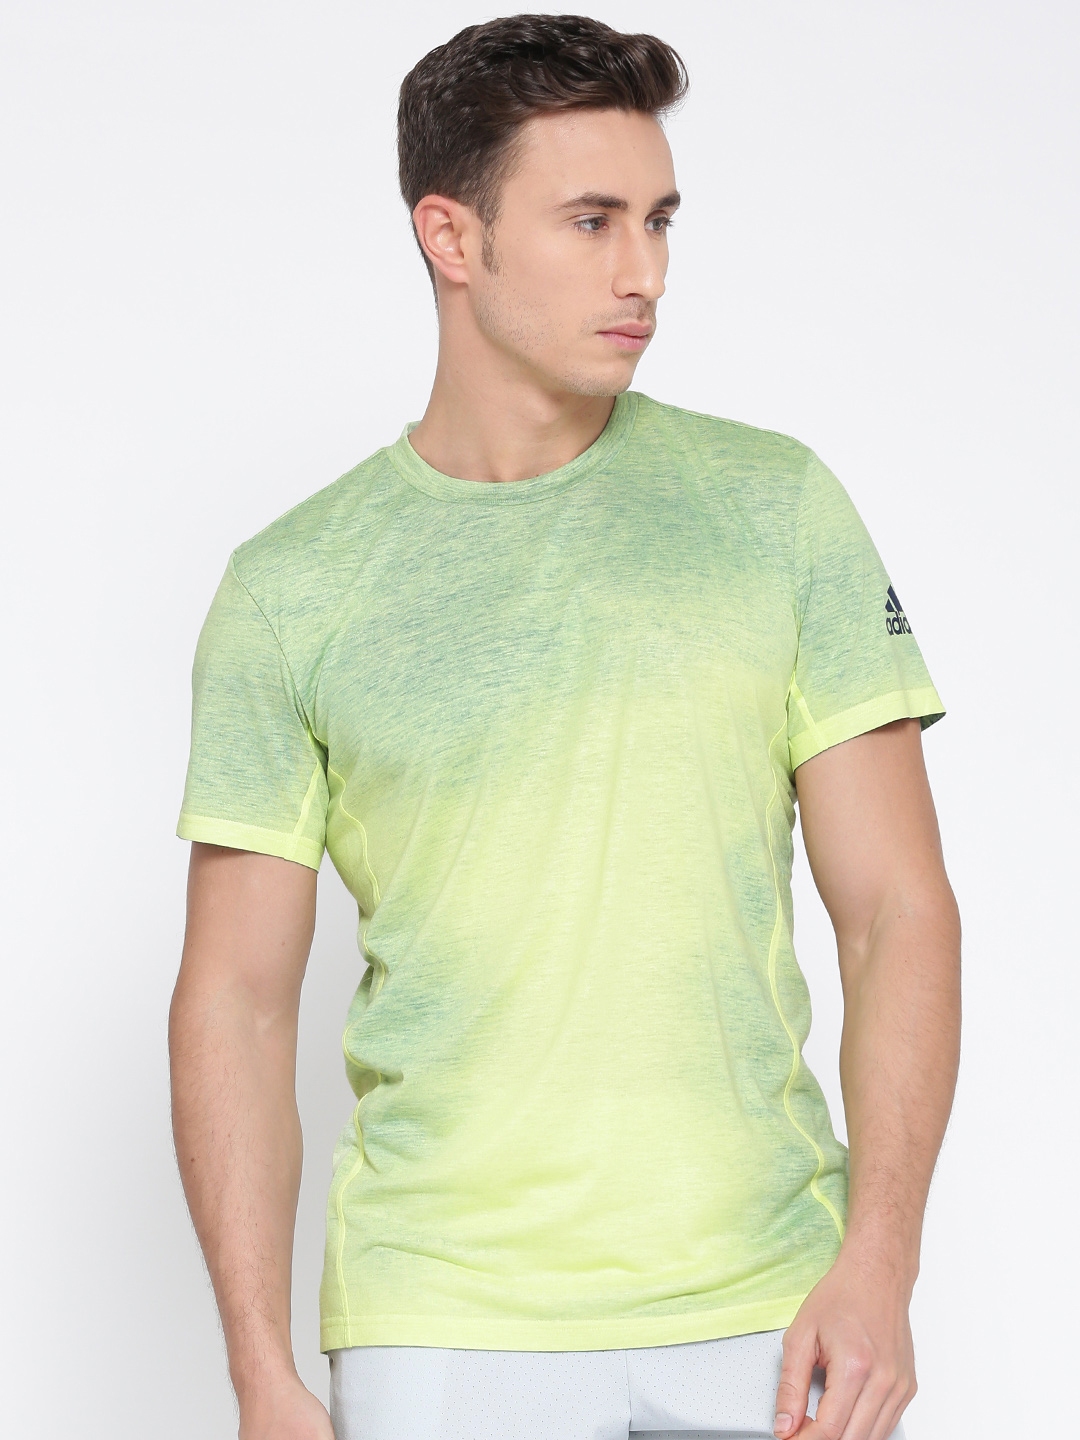 lime green adidas shirt mens